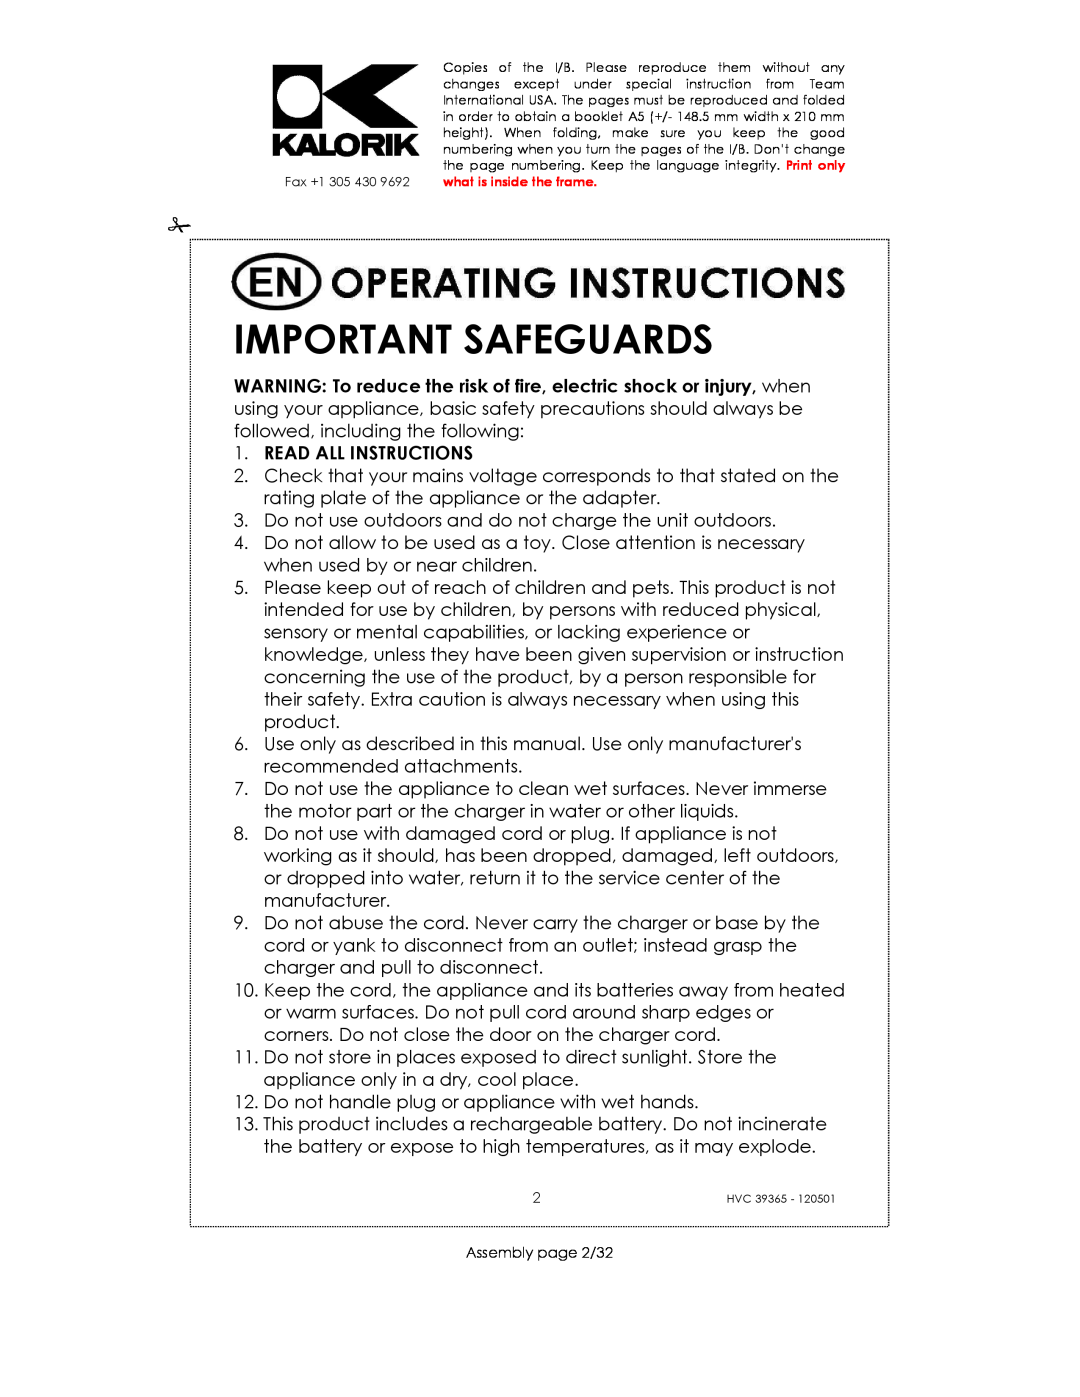 Kalorik HVC 39365 manual Important Safeguards, Read All Instructions 